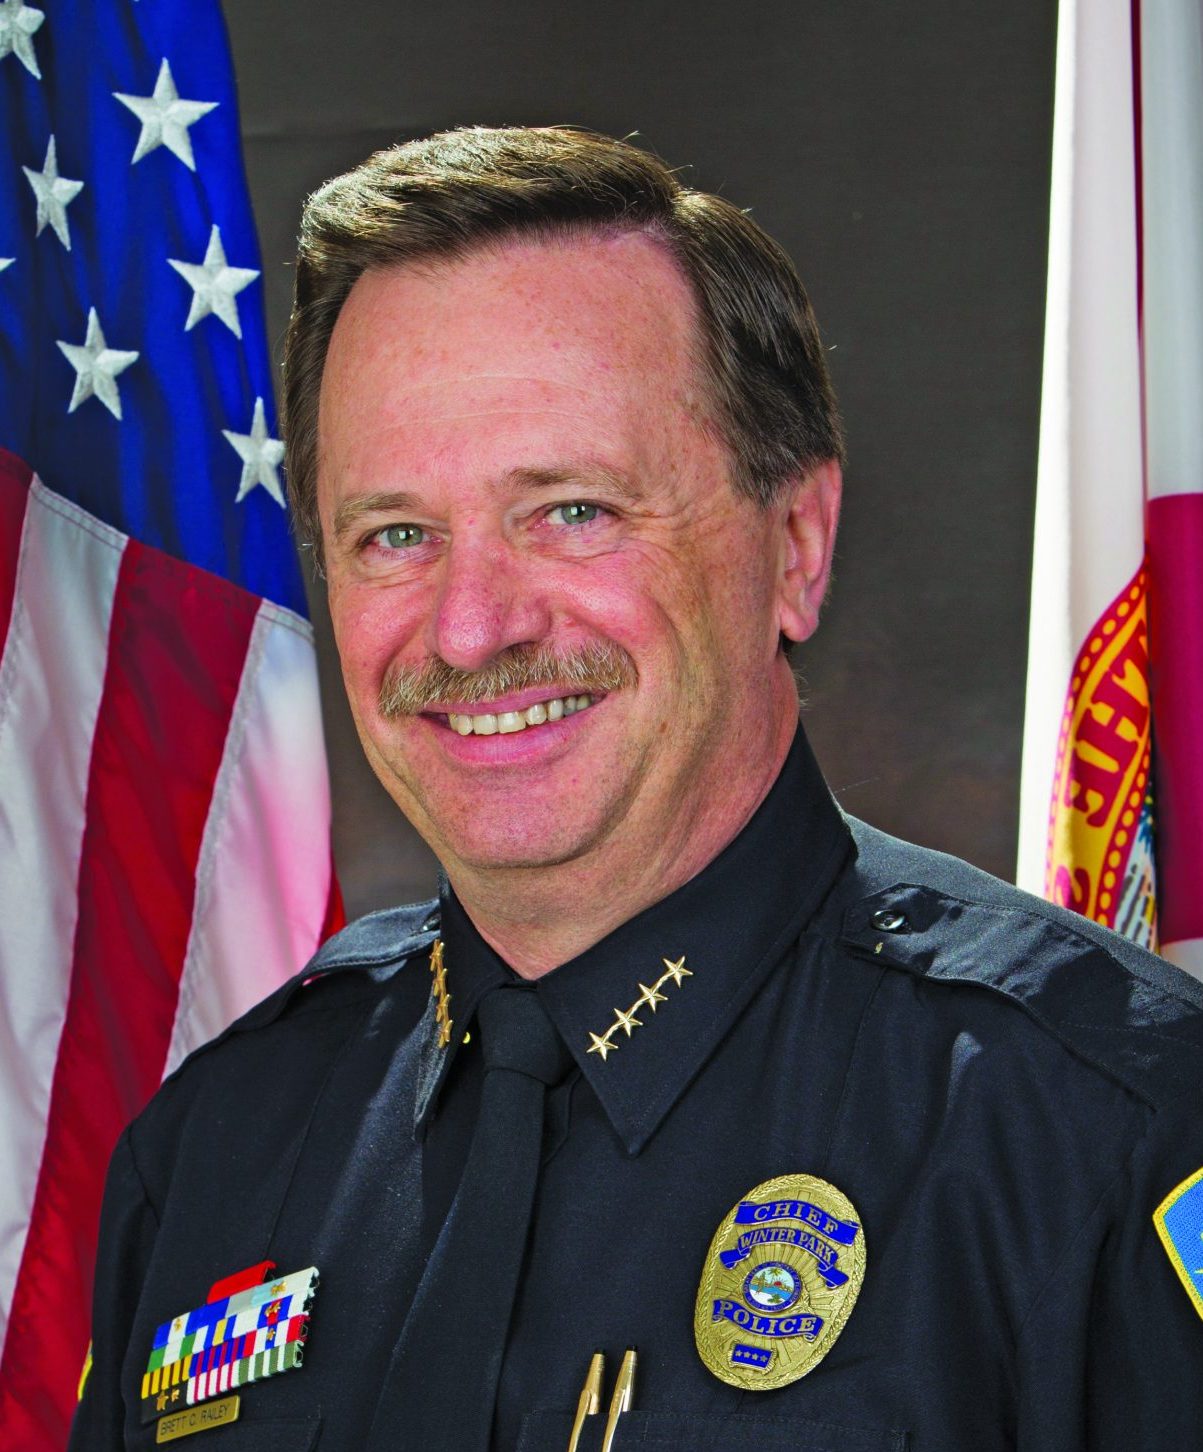 Headshot of fourth respondent: Brett Railey, Chief of Police (Ret.), City of Winter Park, Florida